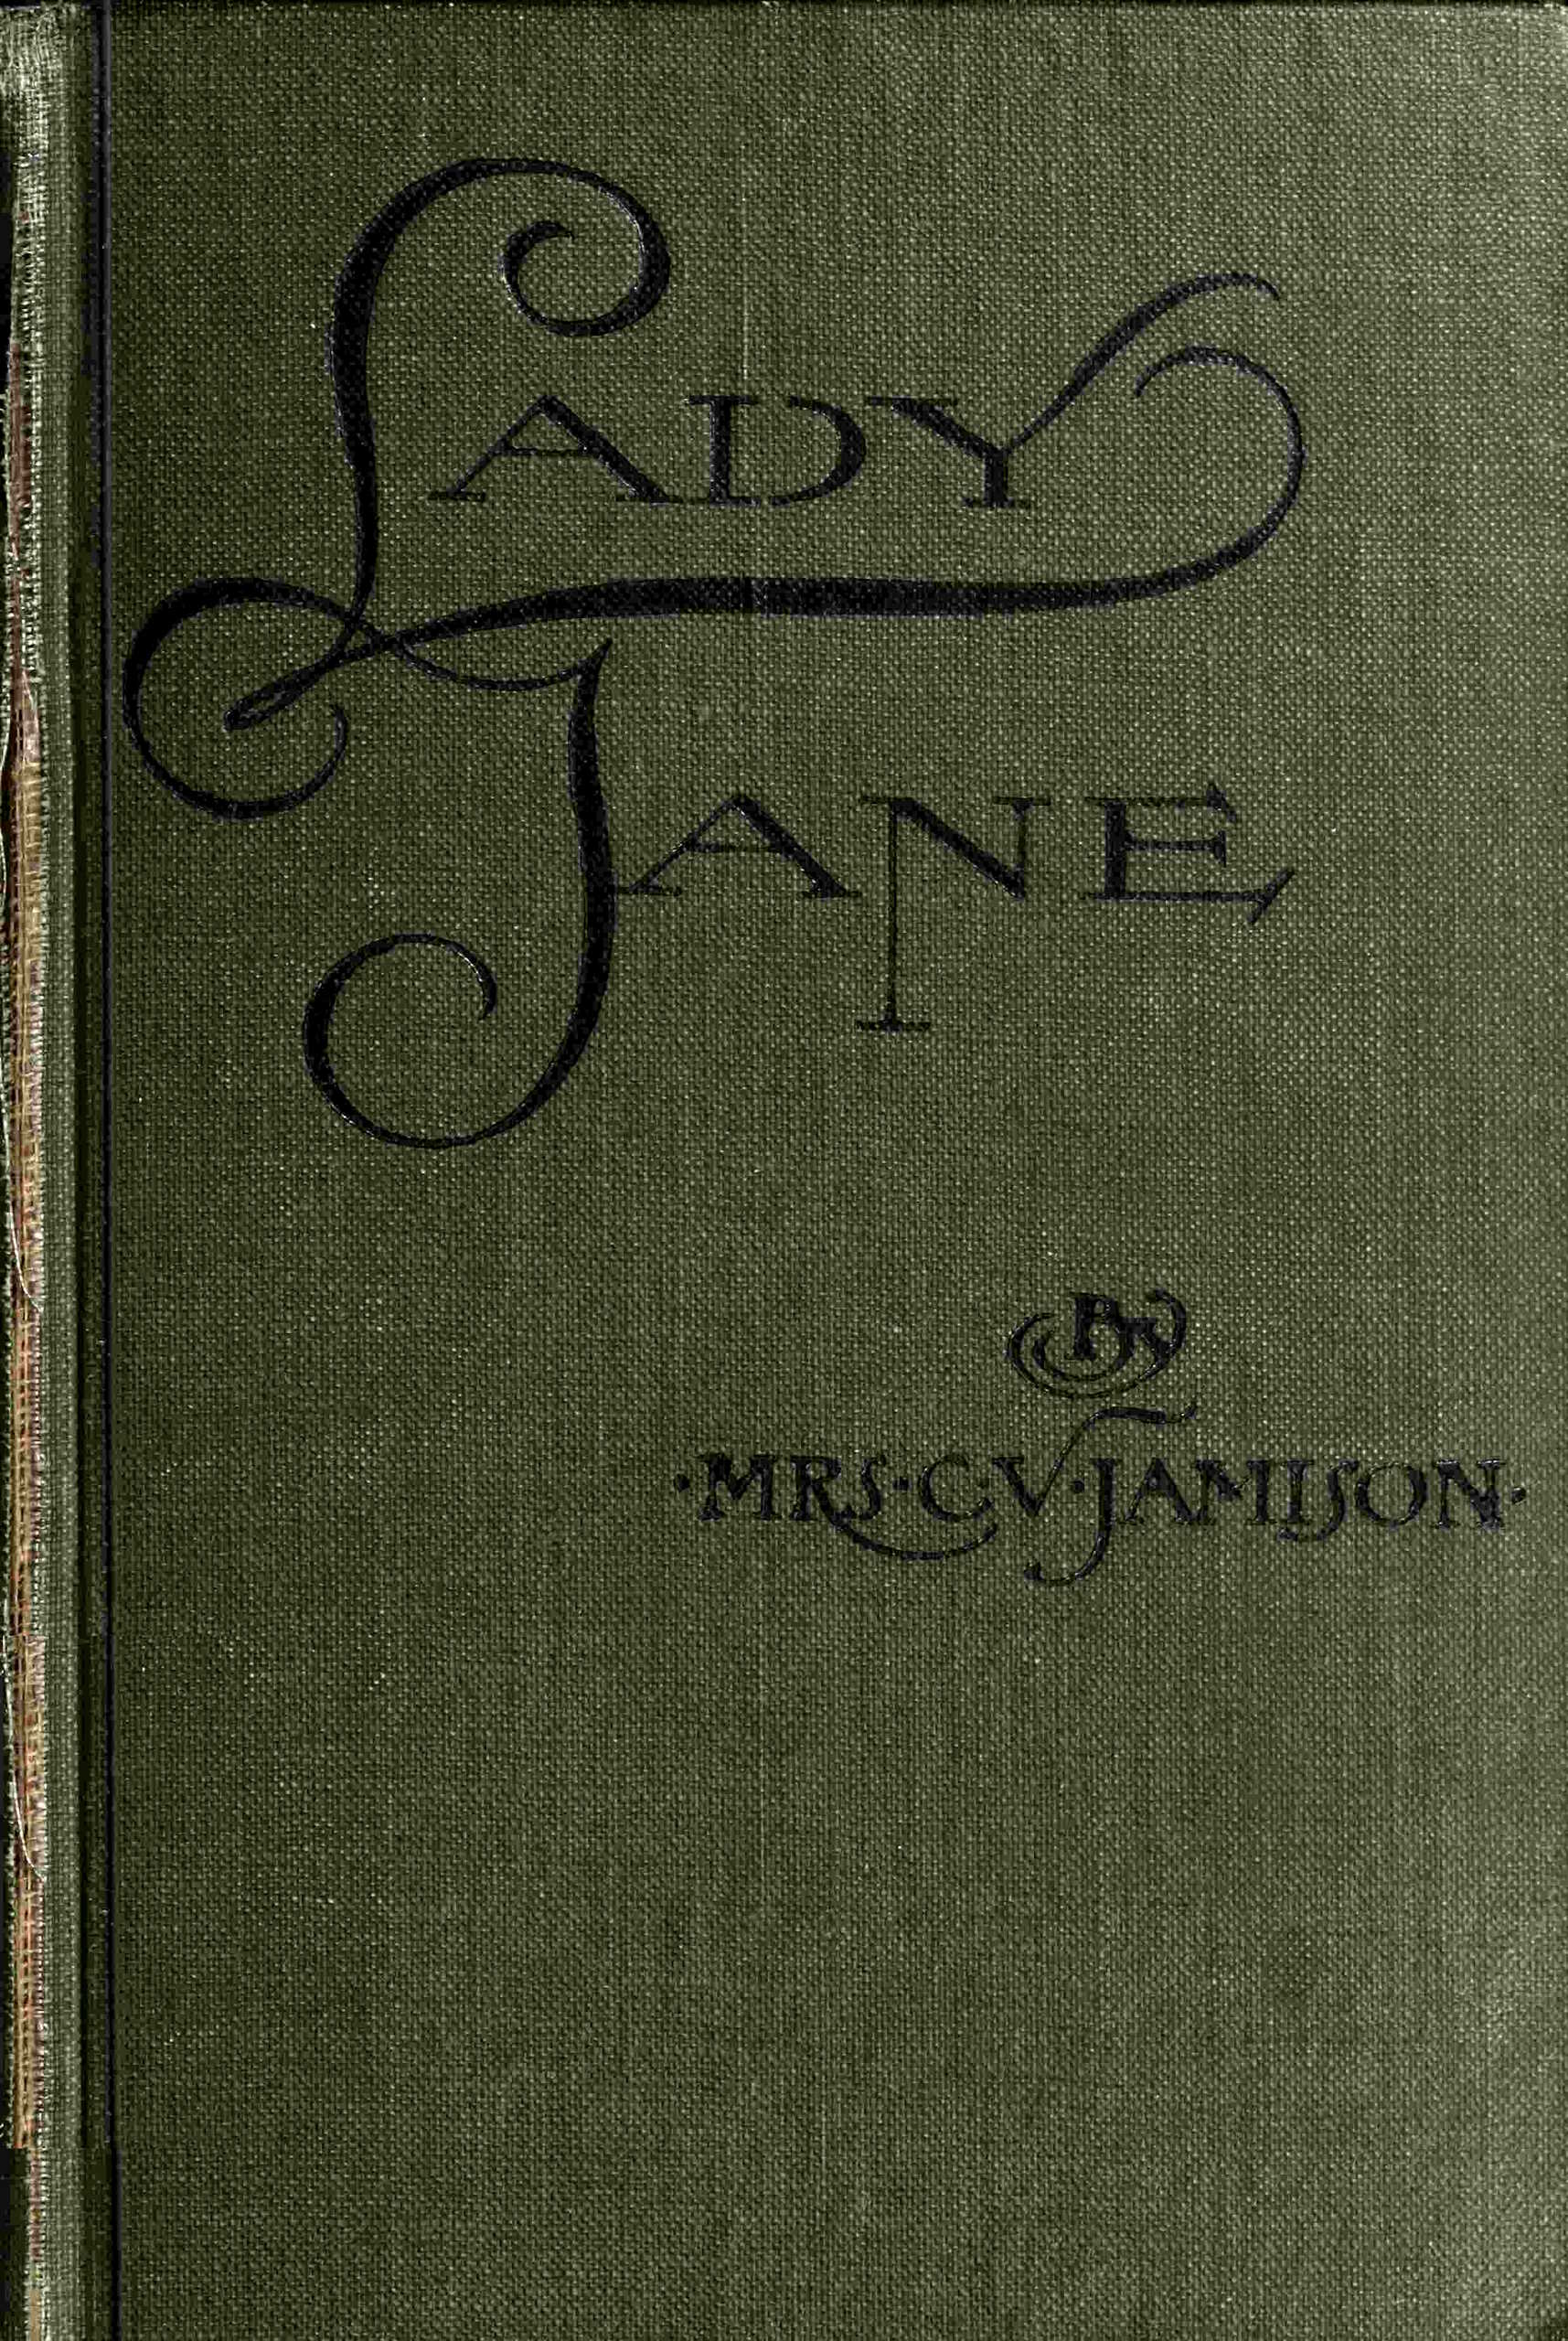 Lady Jane | Project Gutenberg